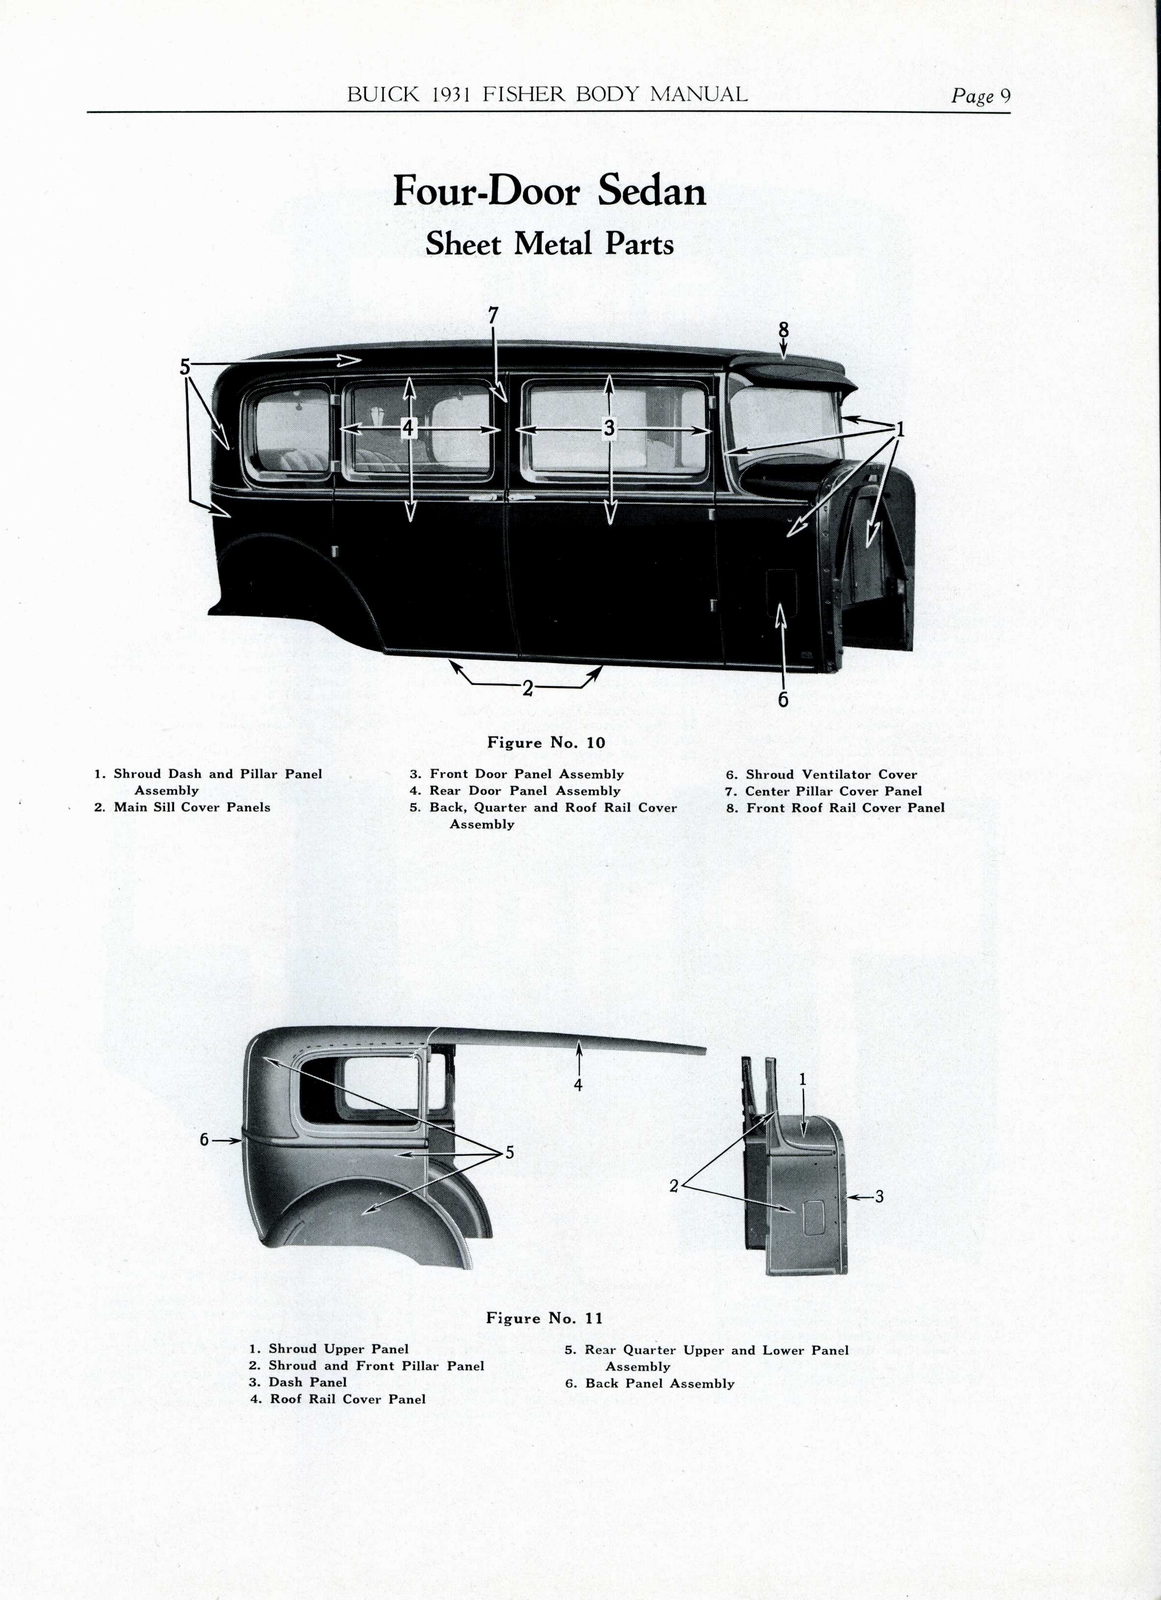 n_1931 Buick Fisher Body Manual-09.jpg